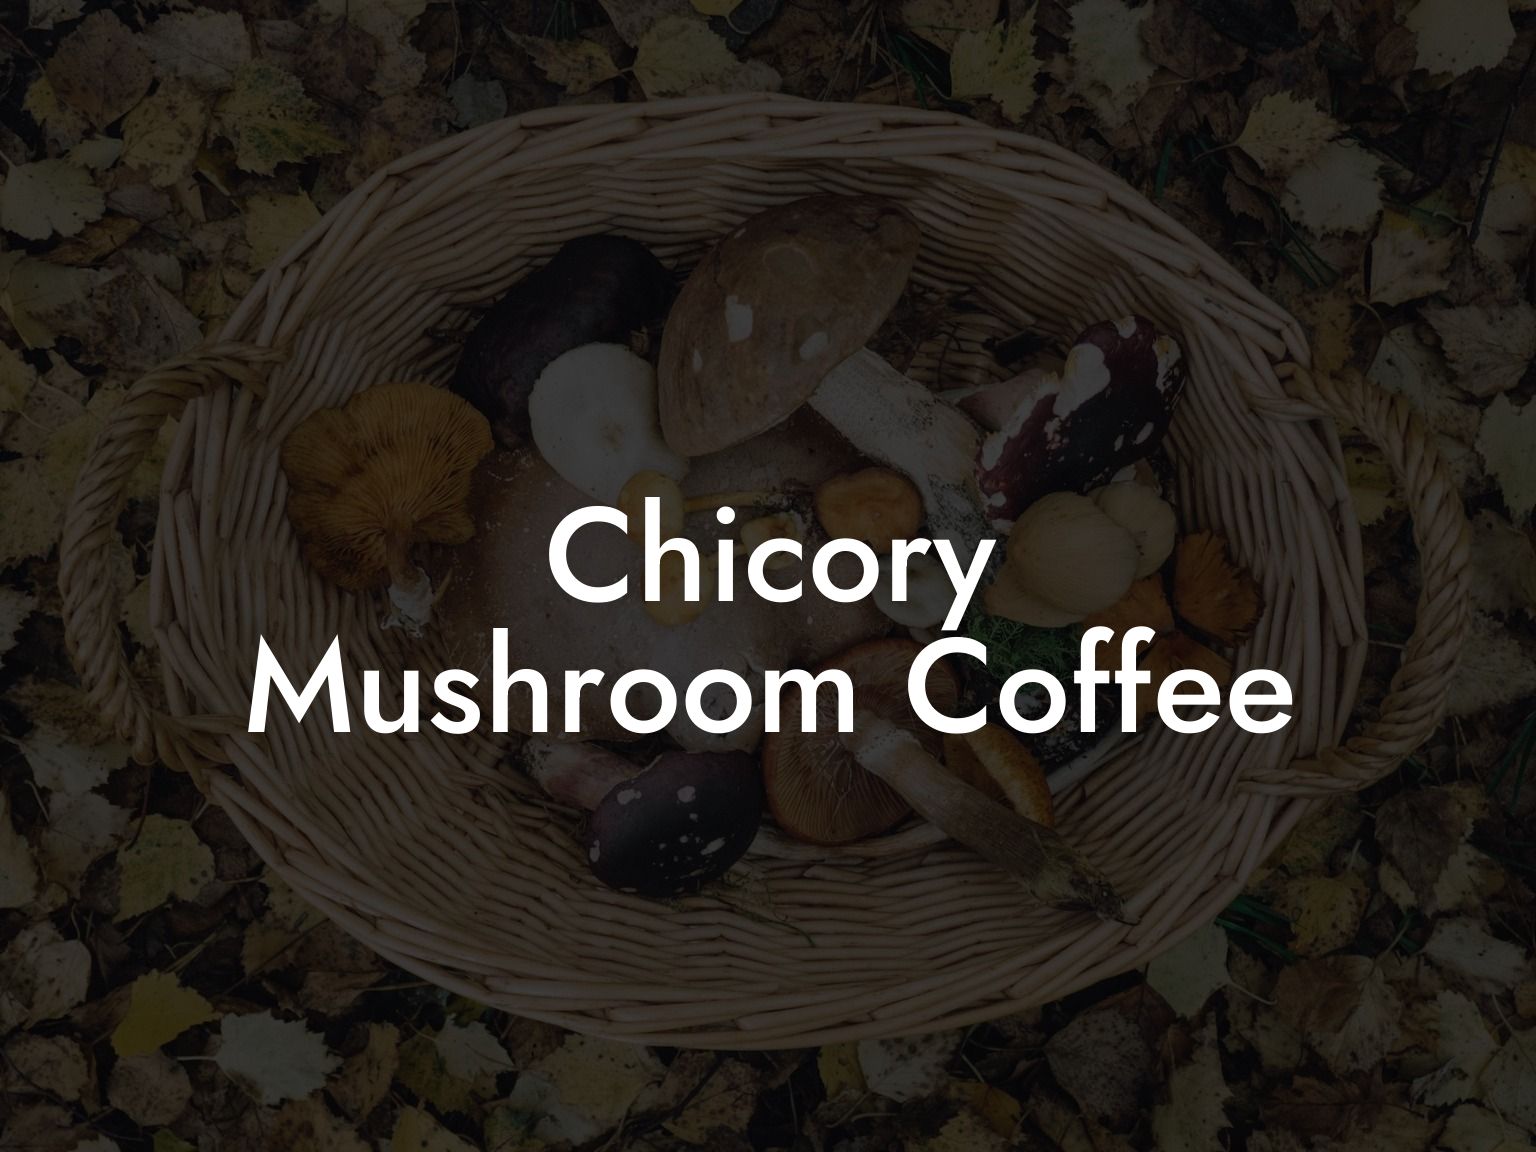 Chicory Mushroom Coffee